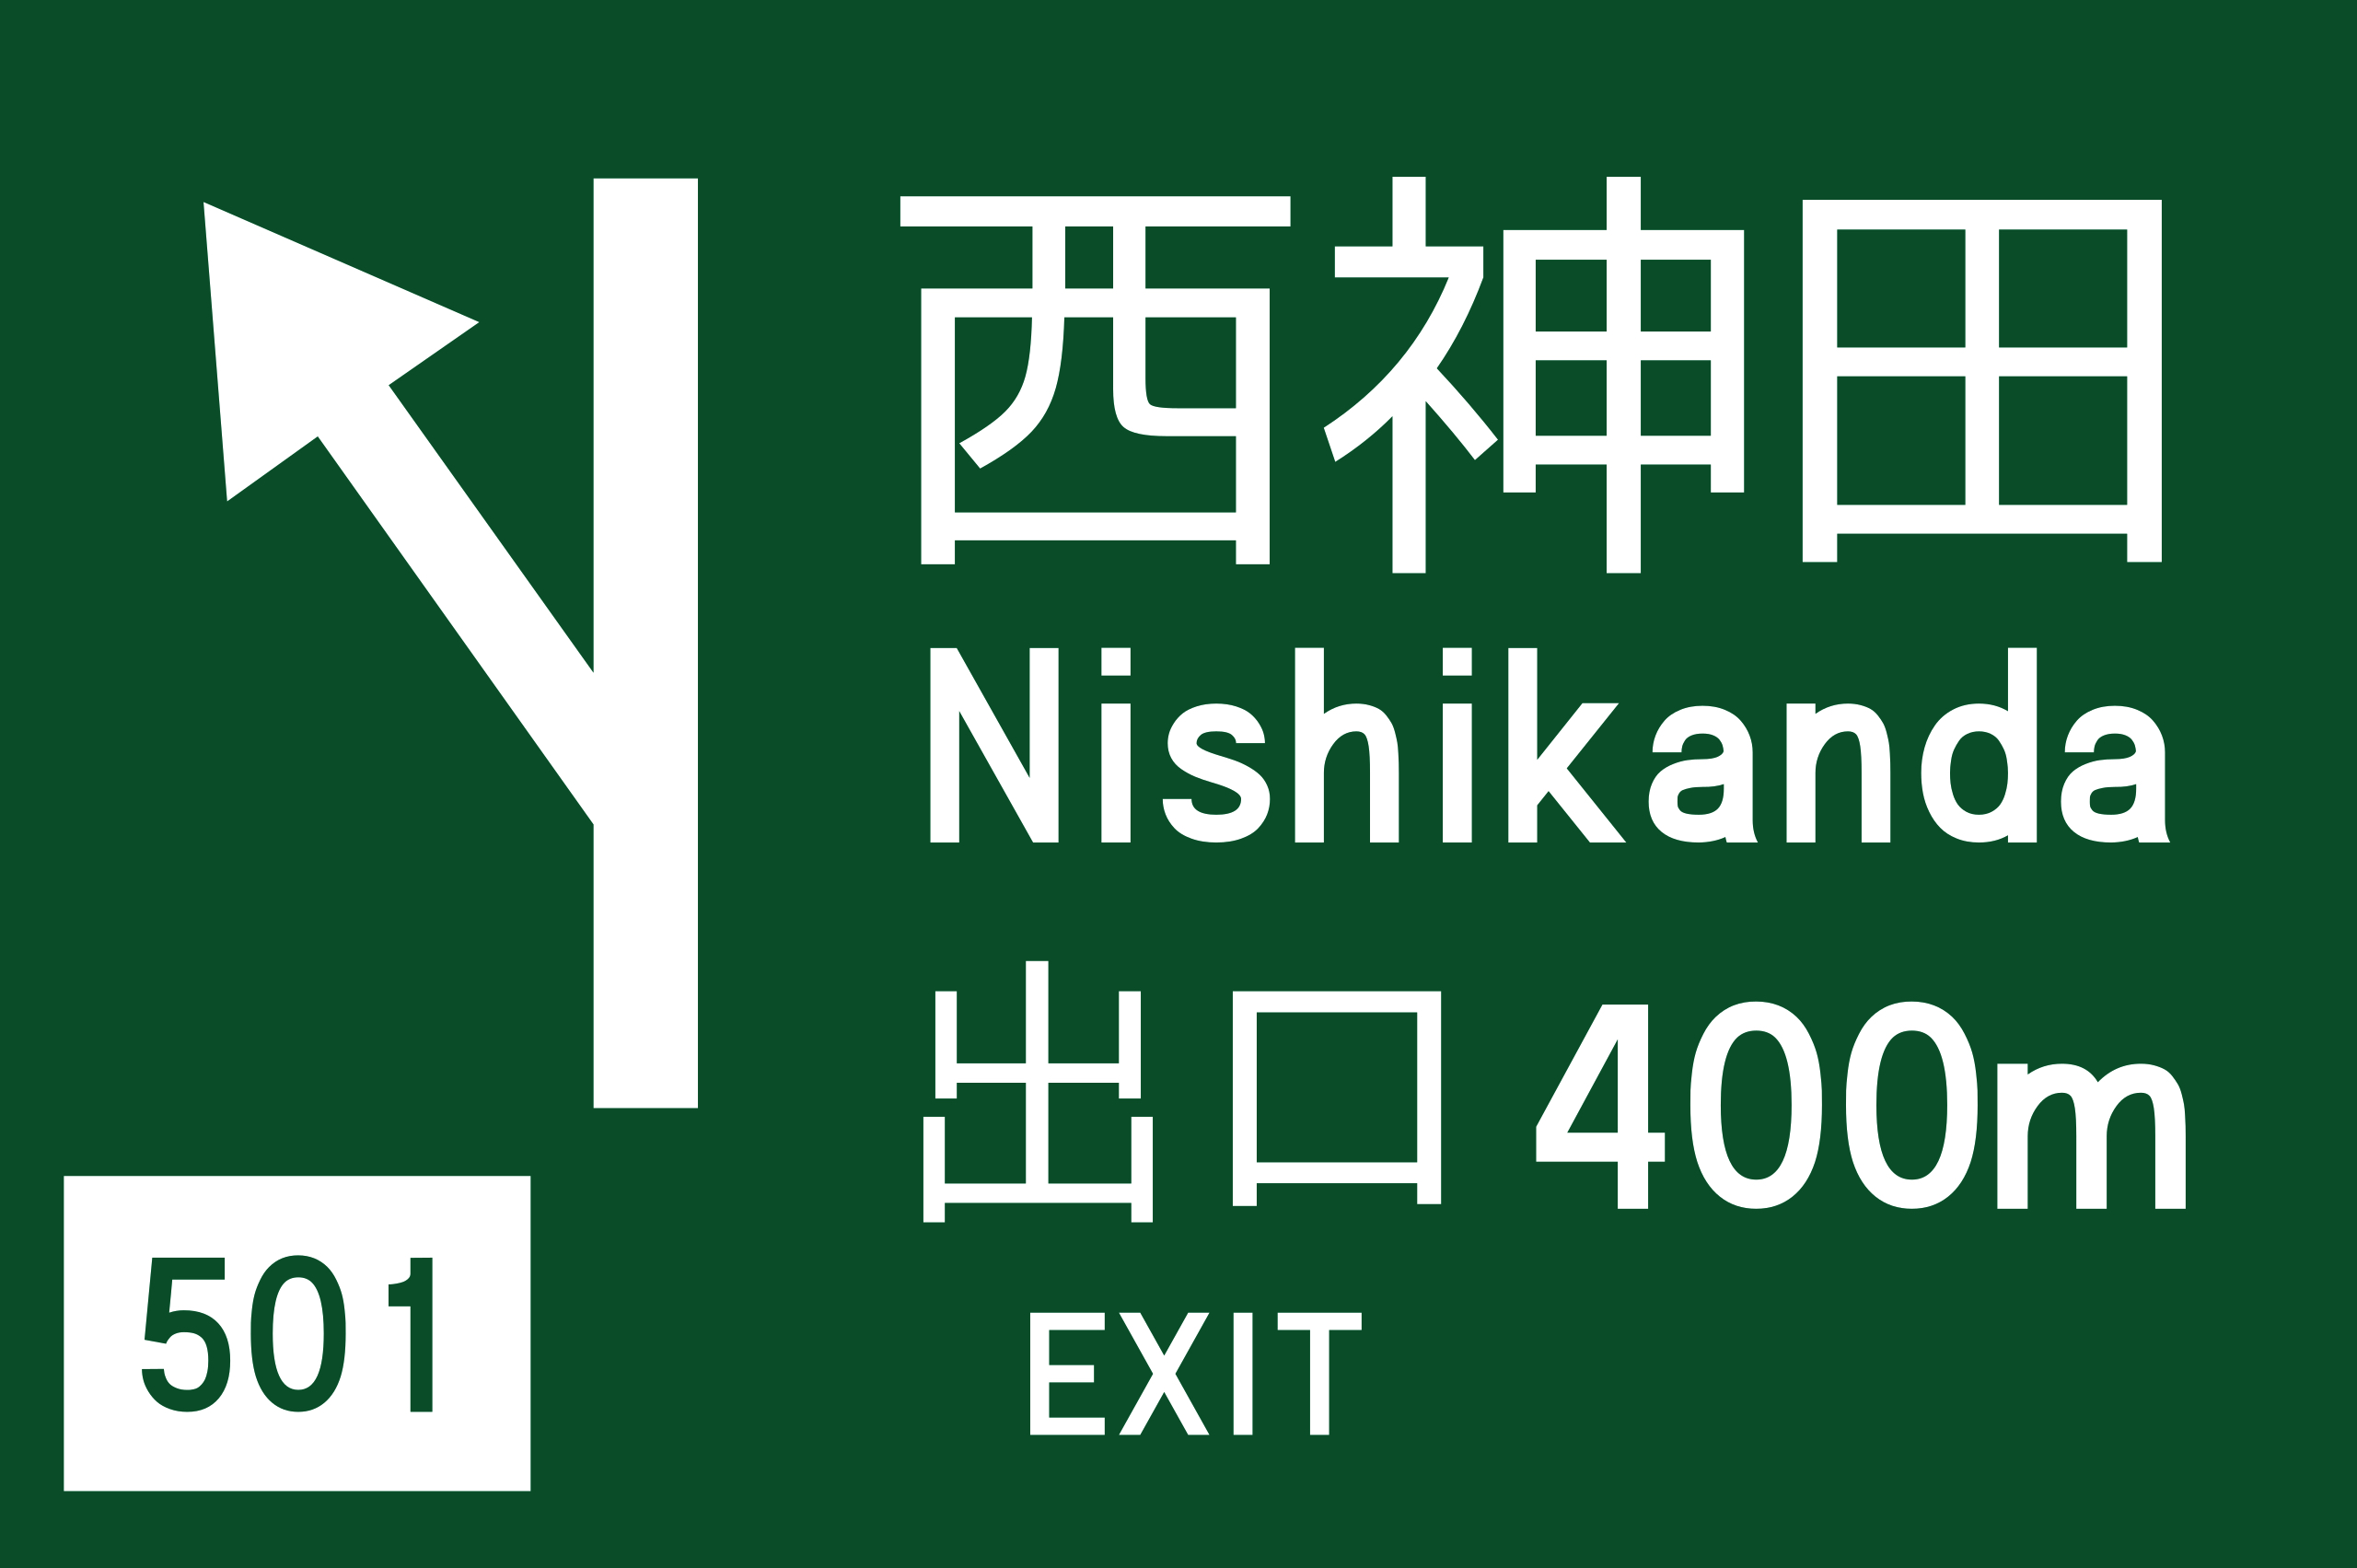 Expressway sign Japan